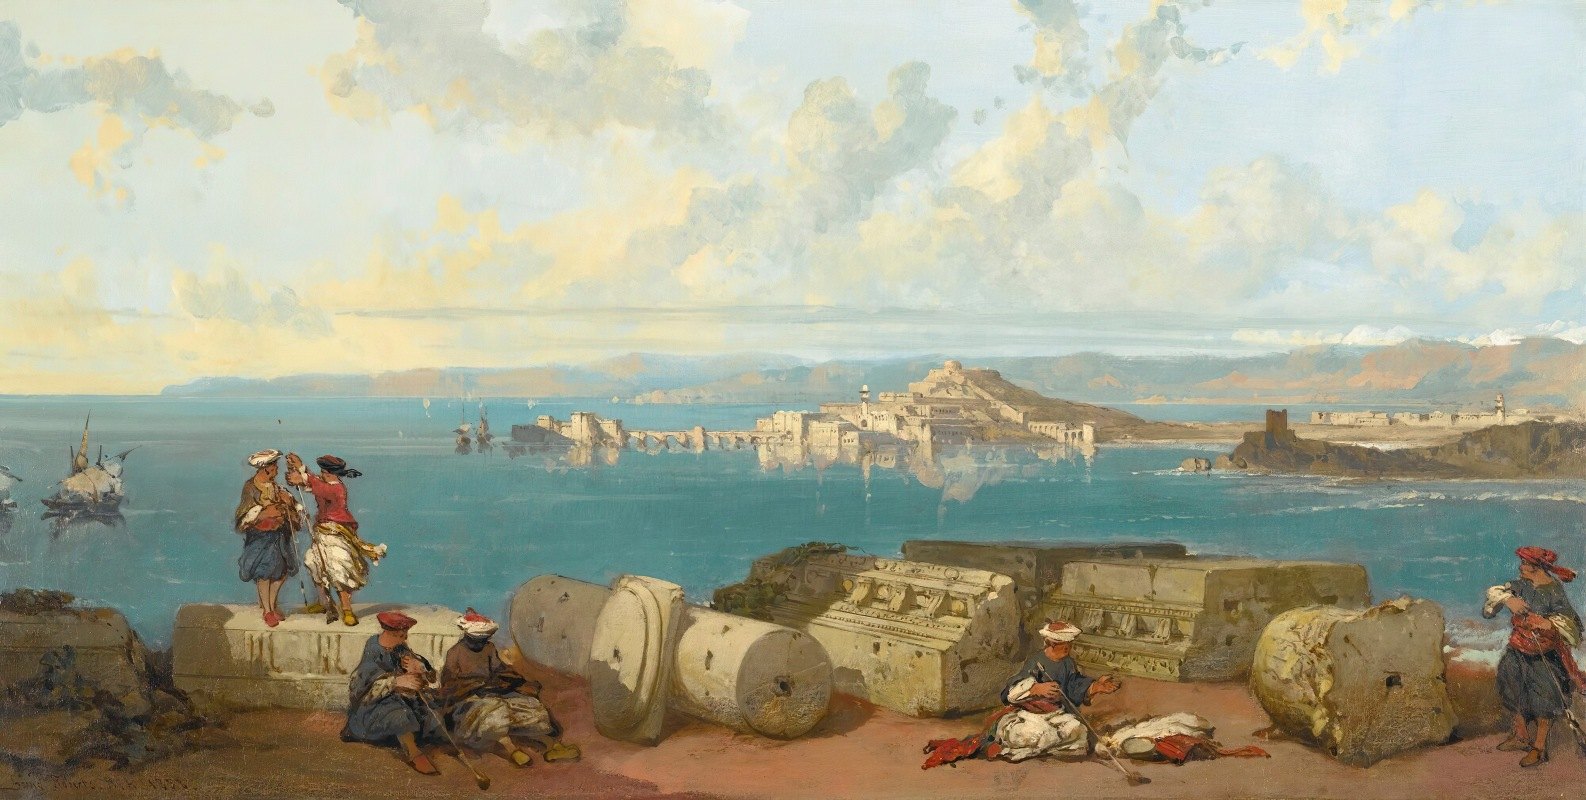 西顿望向黎巴嫩山脉`Sidon Looking Towards The Range Of Lebanon (1858) by David Roberts